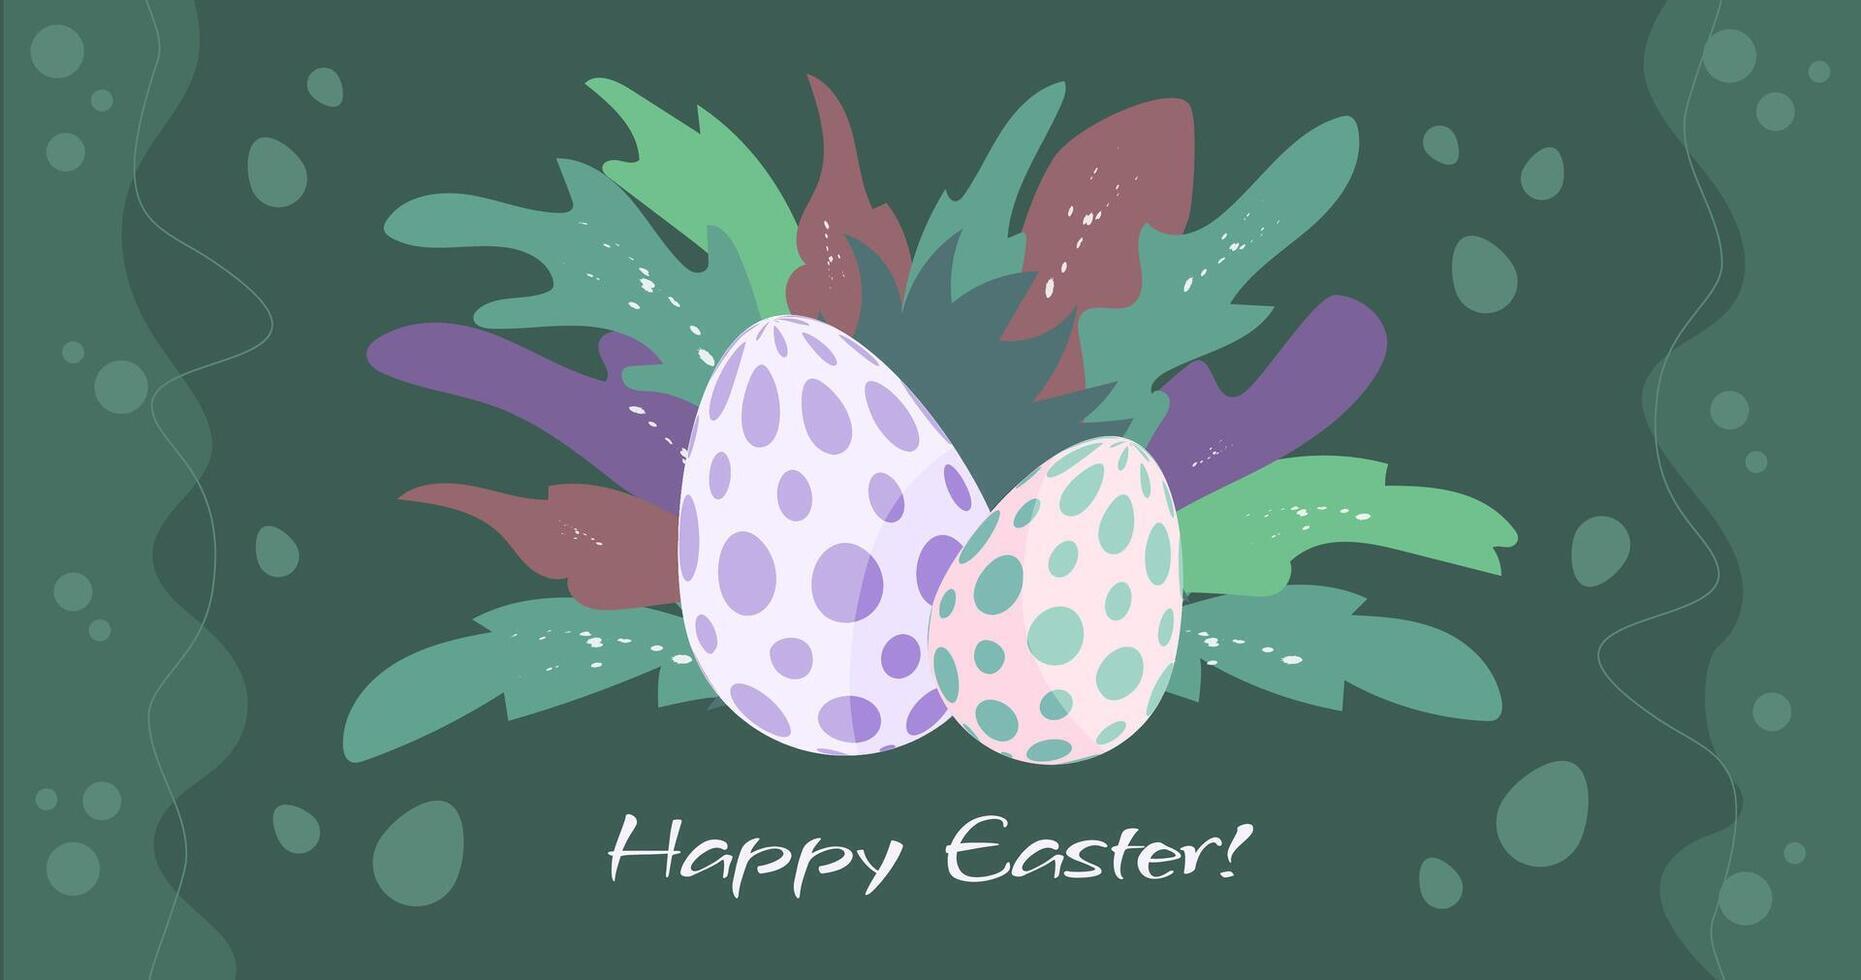 contento Pascua de Resurrección bandera con decorado huevos oculto en césped, moderno póster, saludo con primavera cristiano día festivo. vector ilustración.